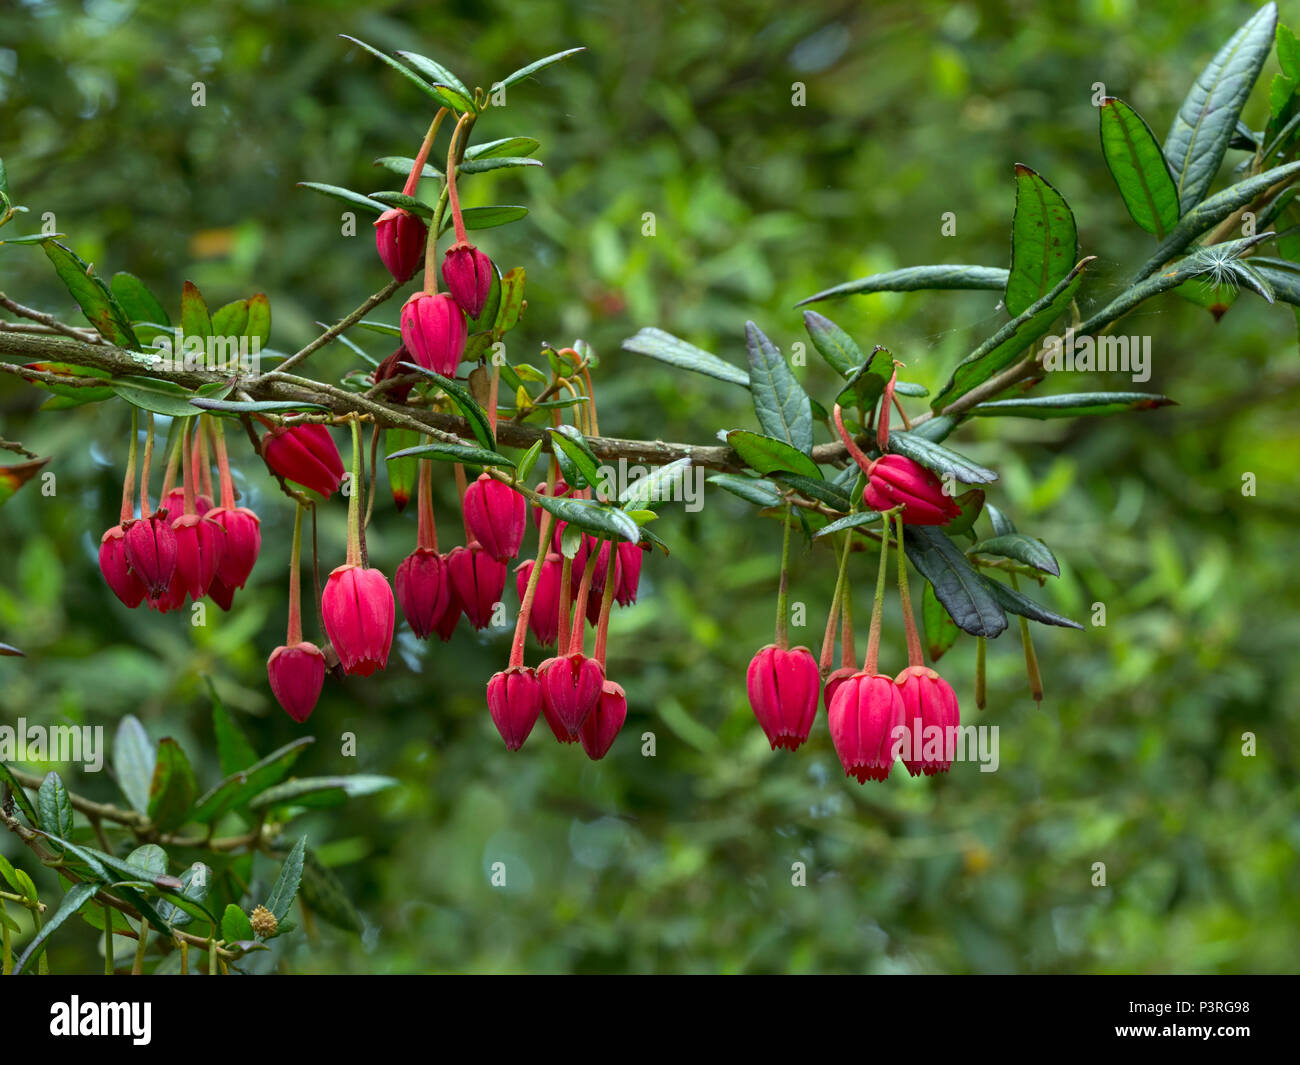 Chilean lantern tree Crinodendron hookerianum Stock Photo - Alamy